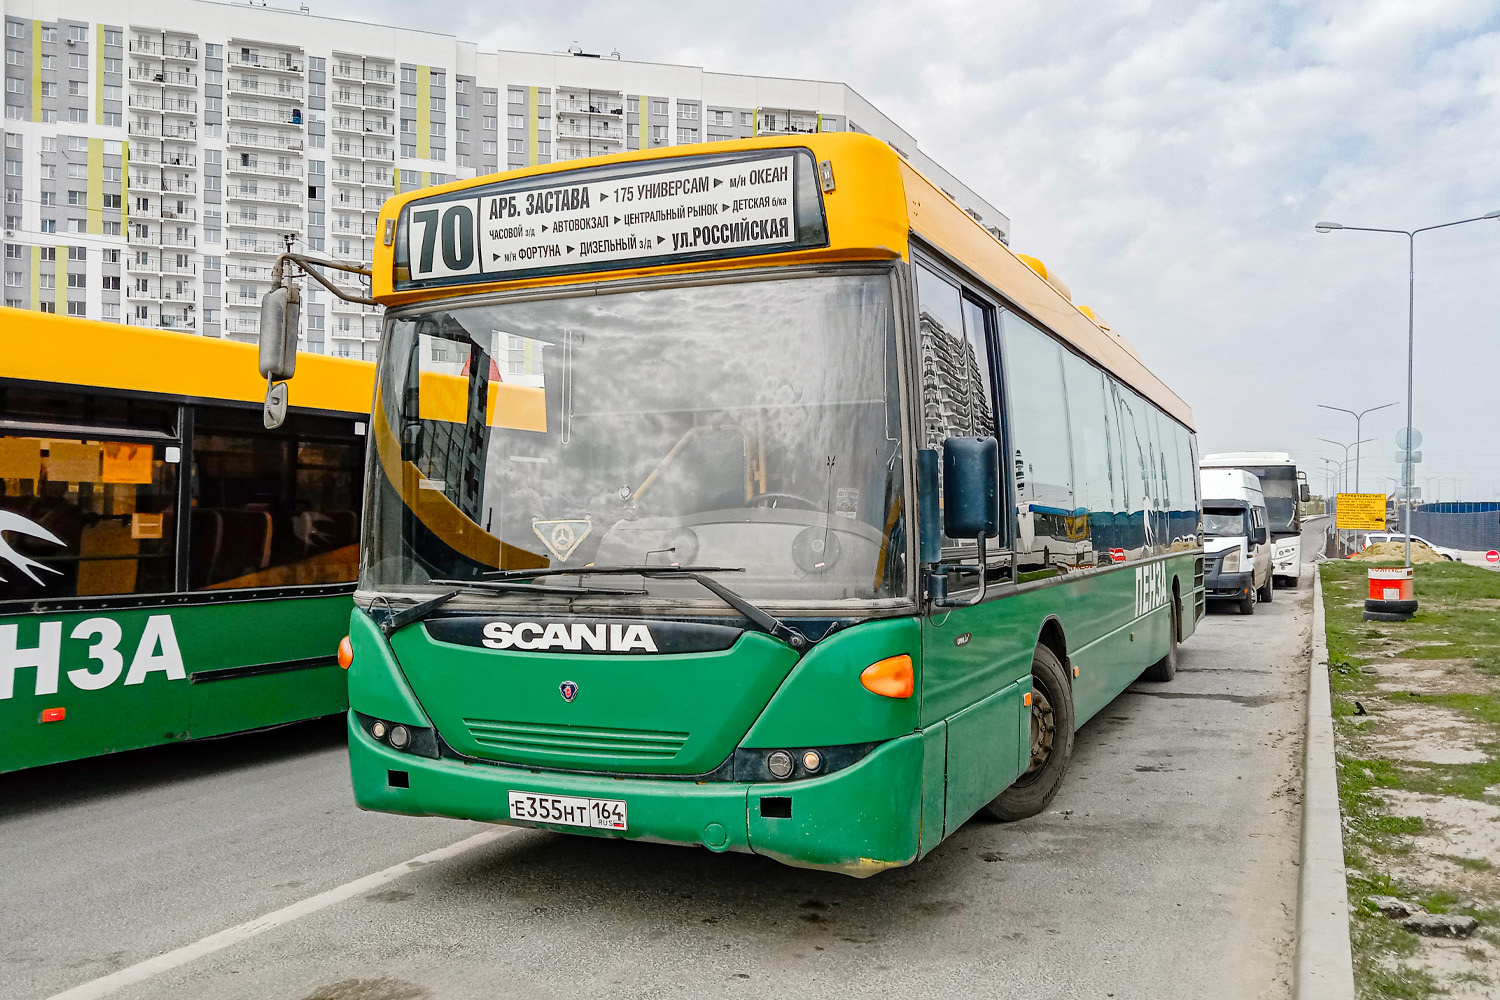 Penza, Scania OmniLink CK95UB 4x2LB # Е 355 НТ 164